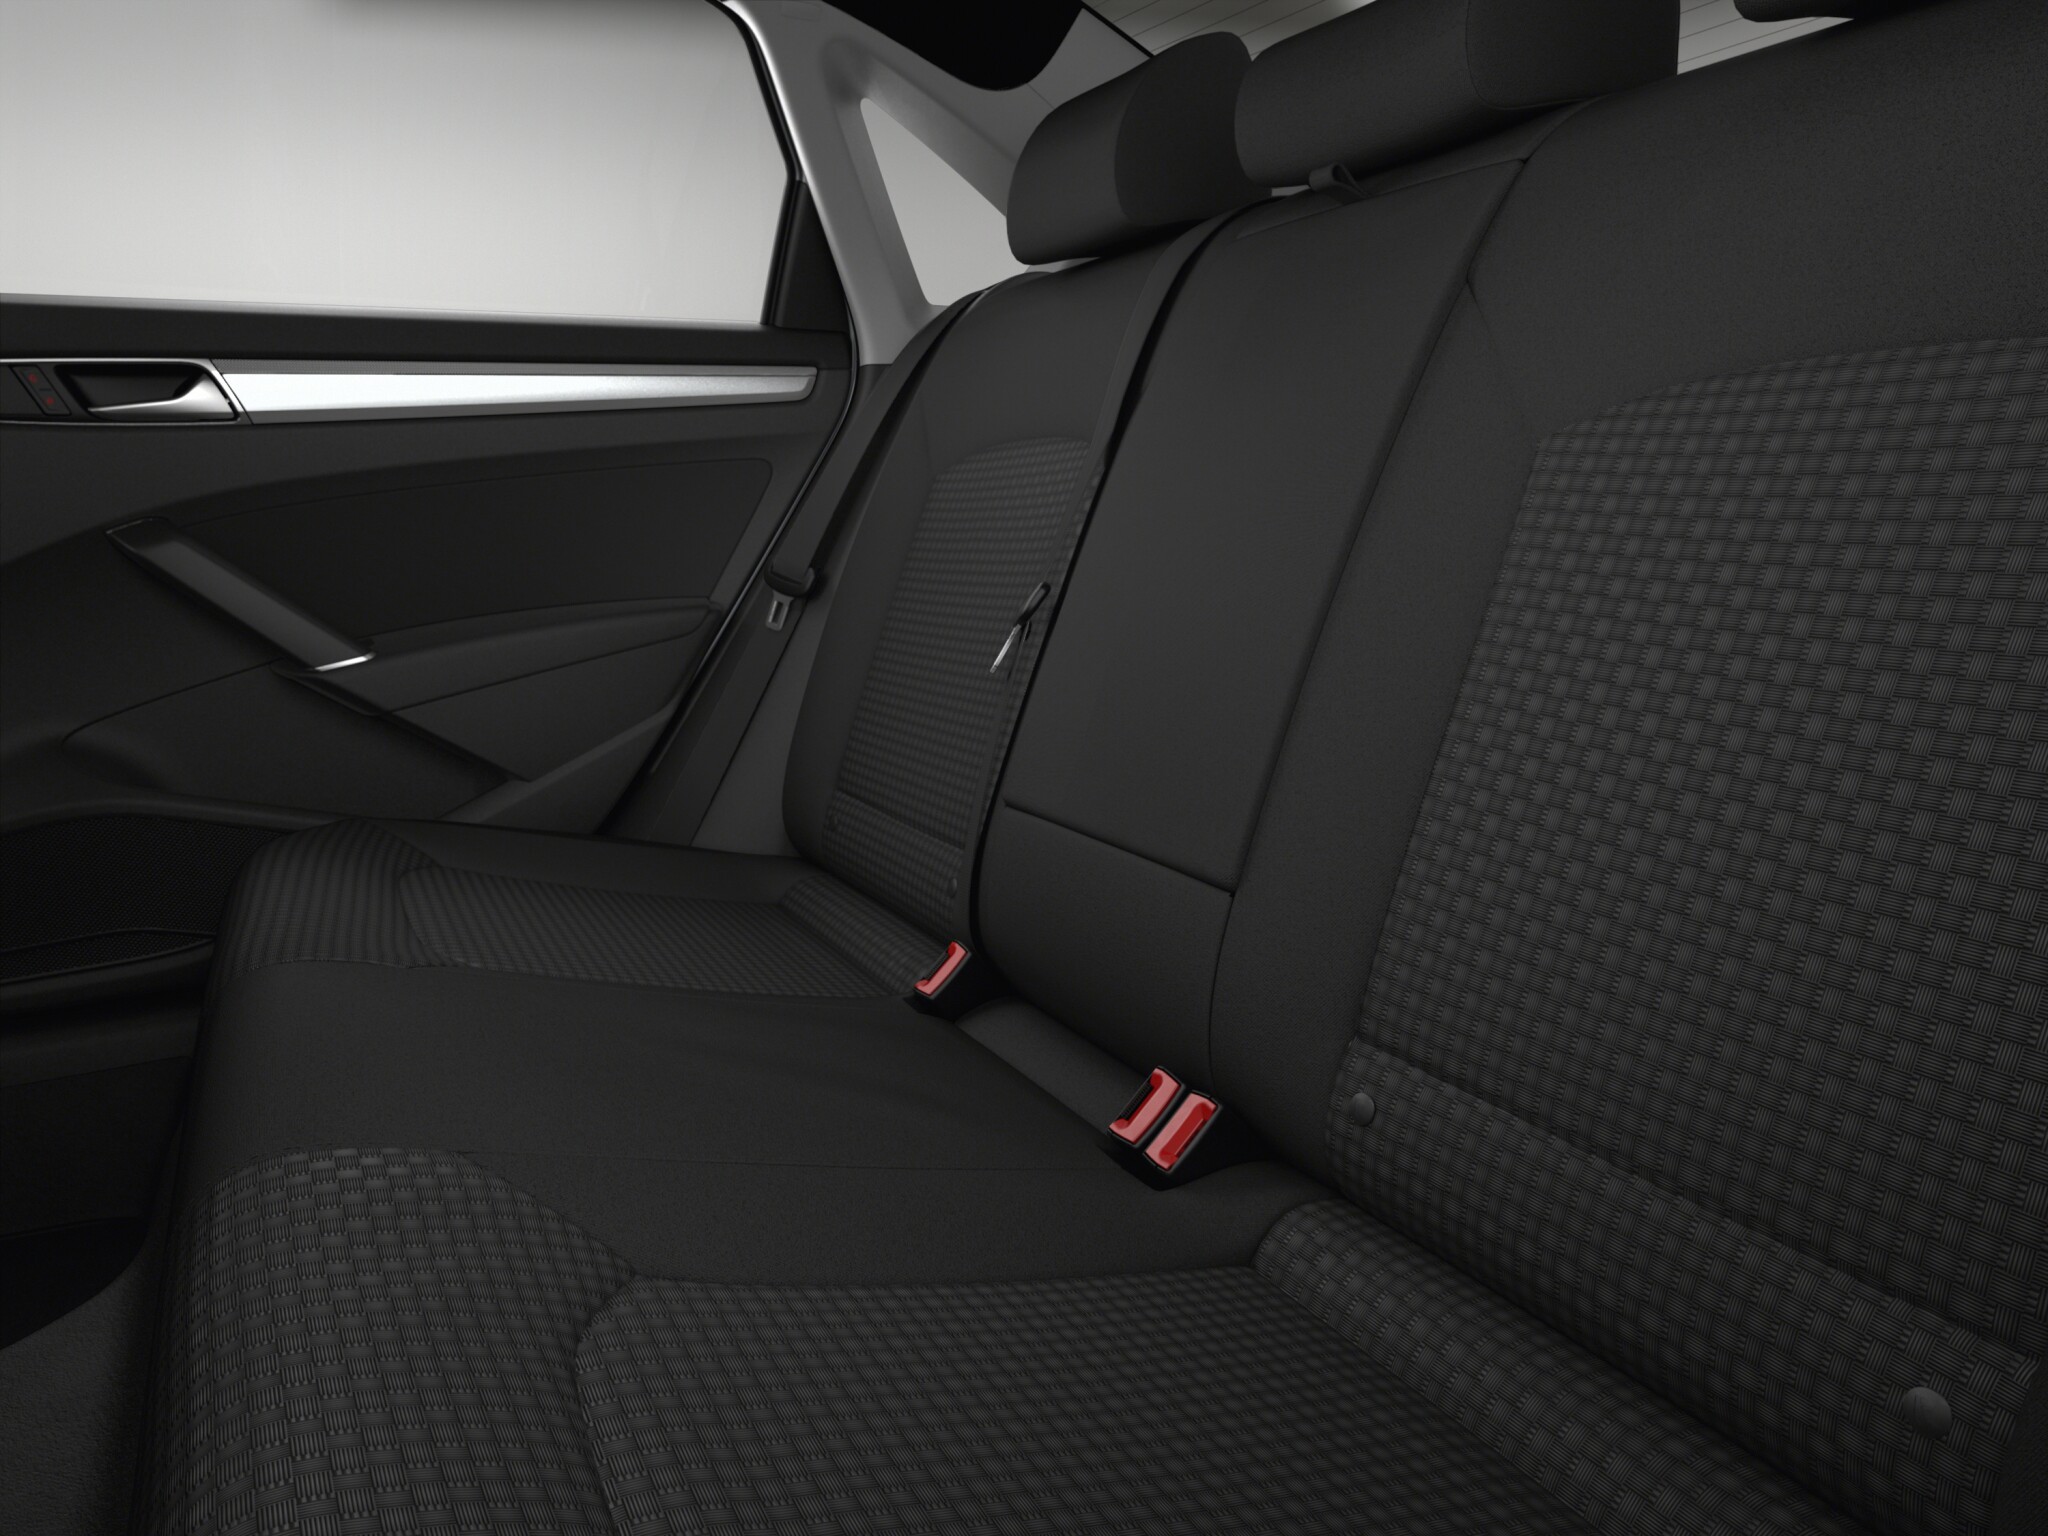 Volkswagen Passat V6 SEL Premium interior rear seat view